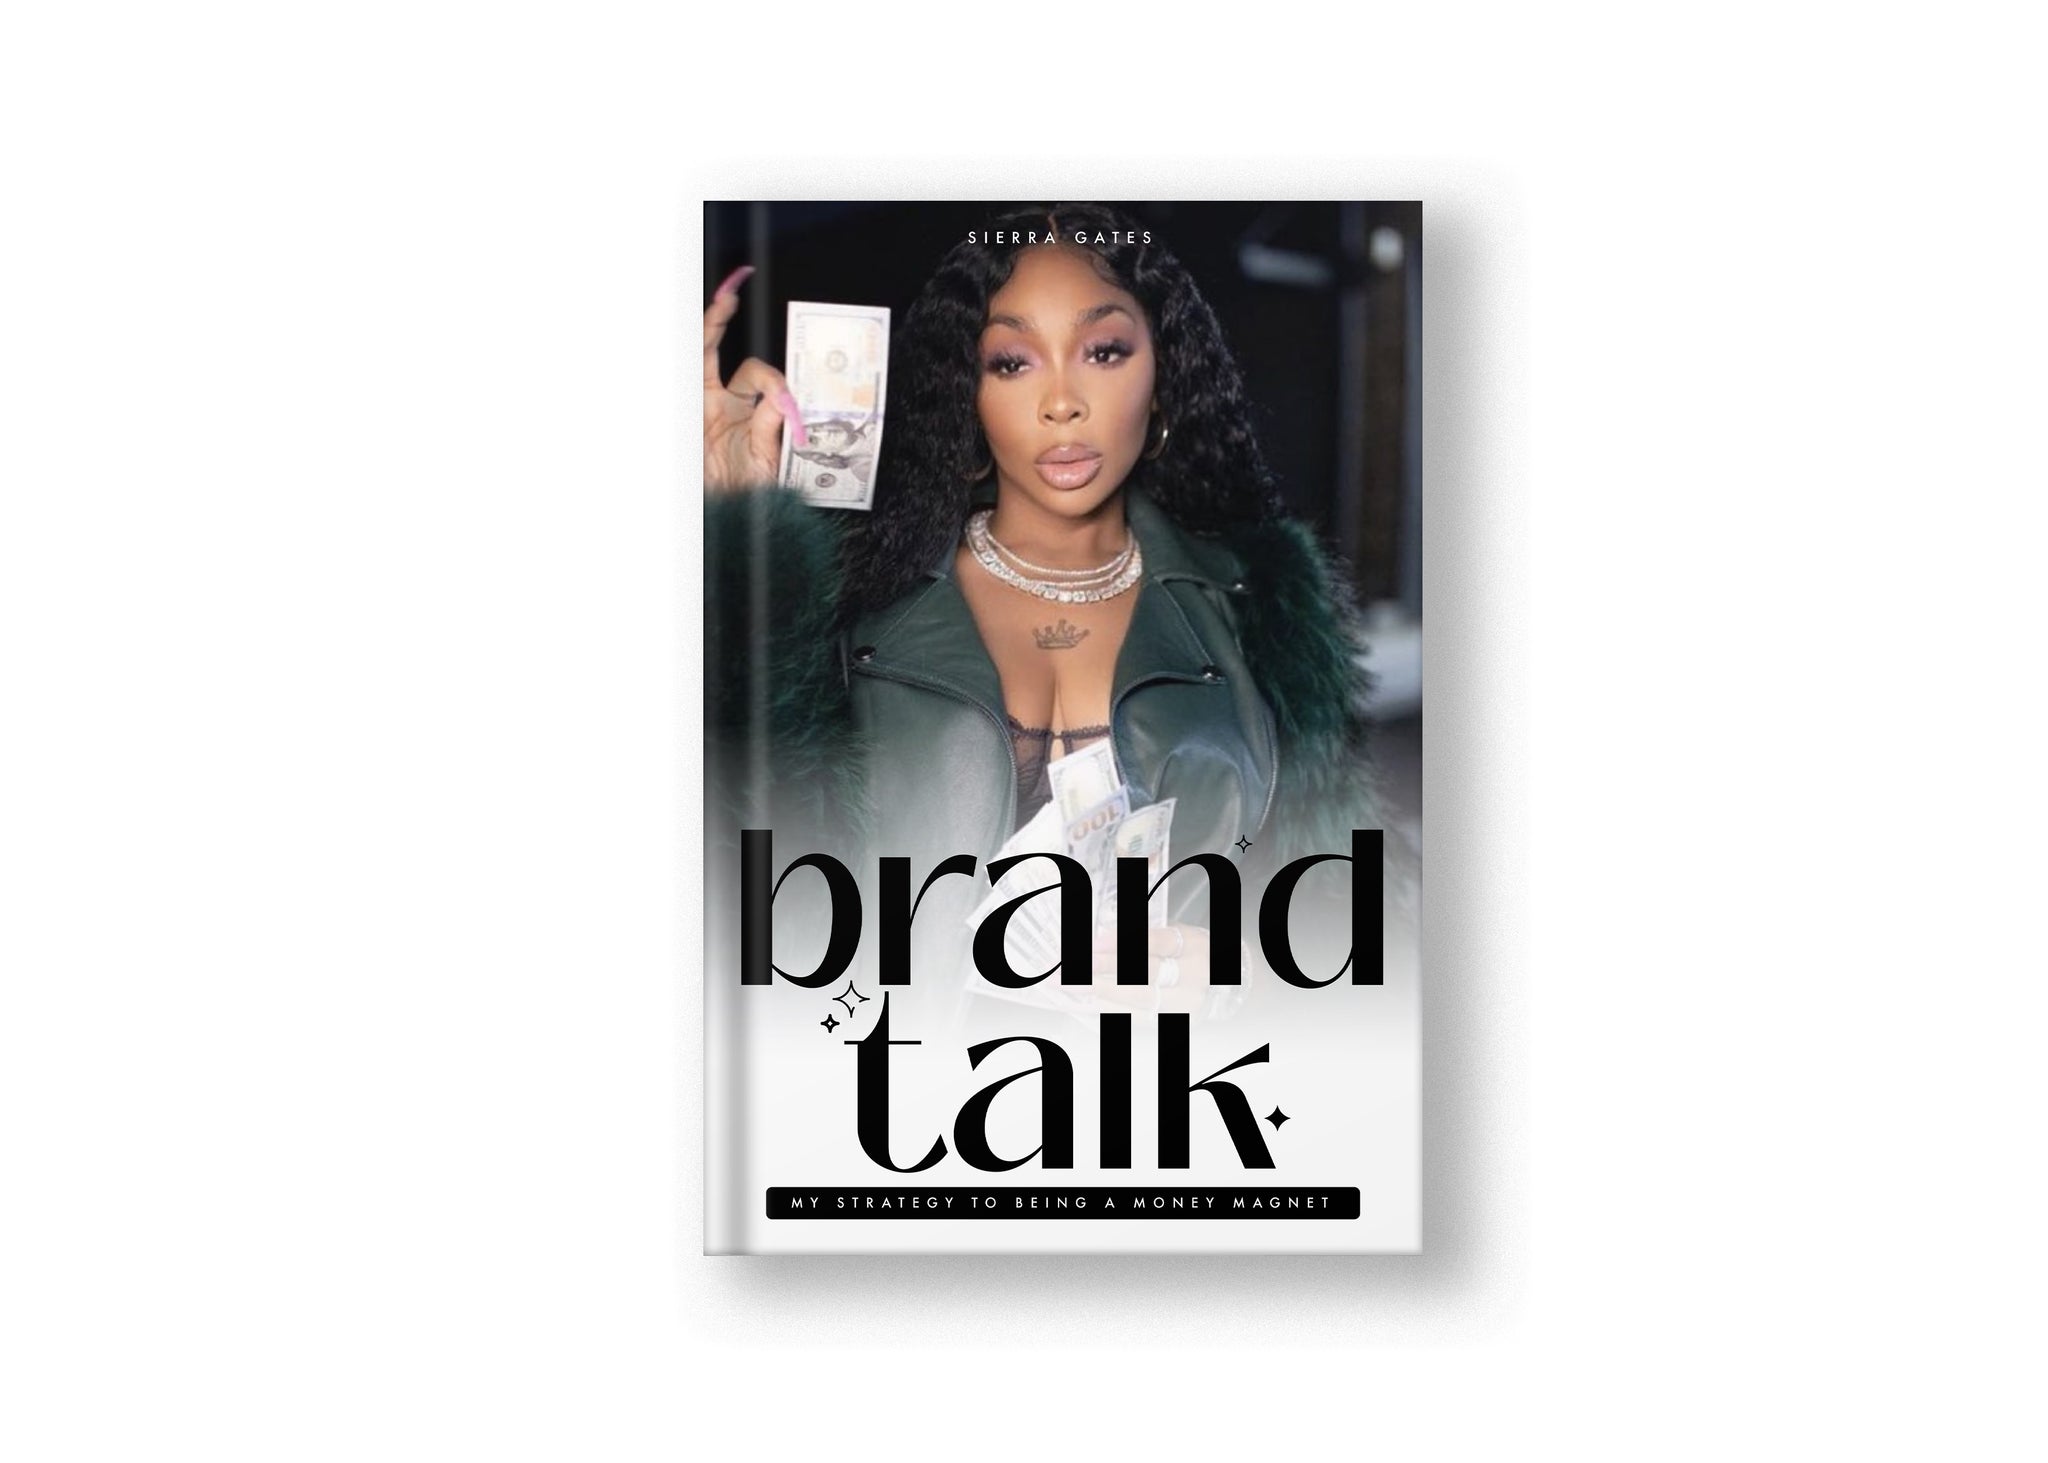 Brand Talk (eBook) by Sierra Gates